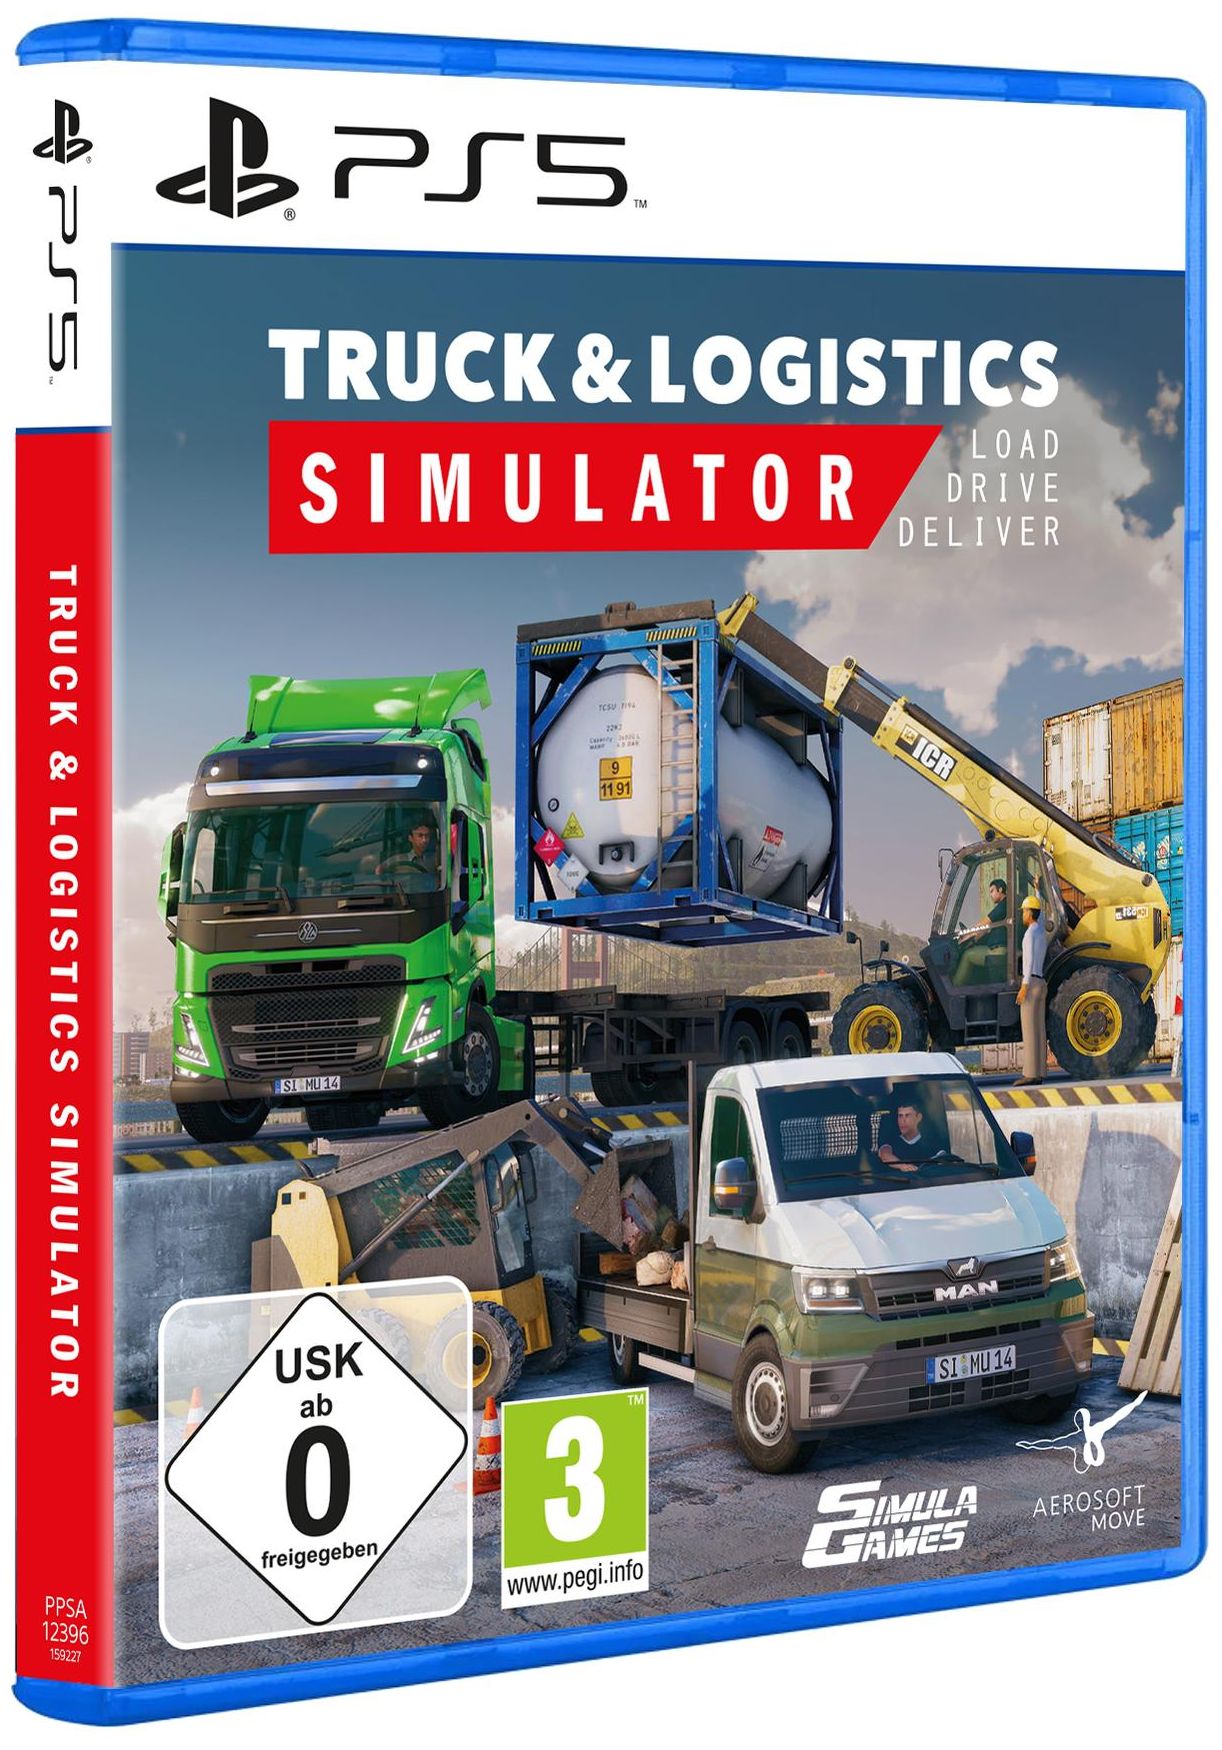 NBG Truck & Logistics Simulator (PlayStation 5) bei Boomstore